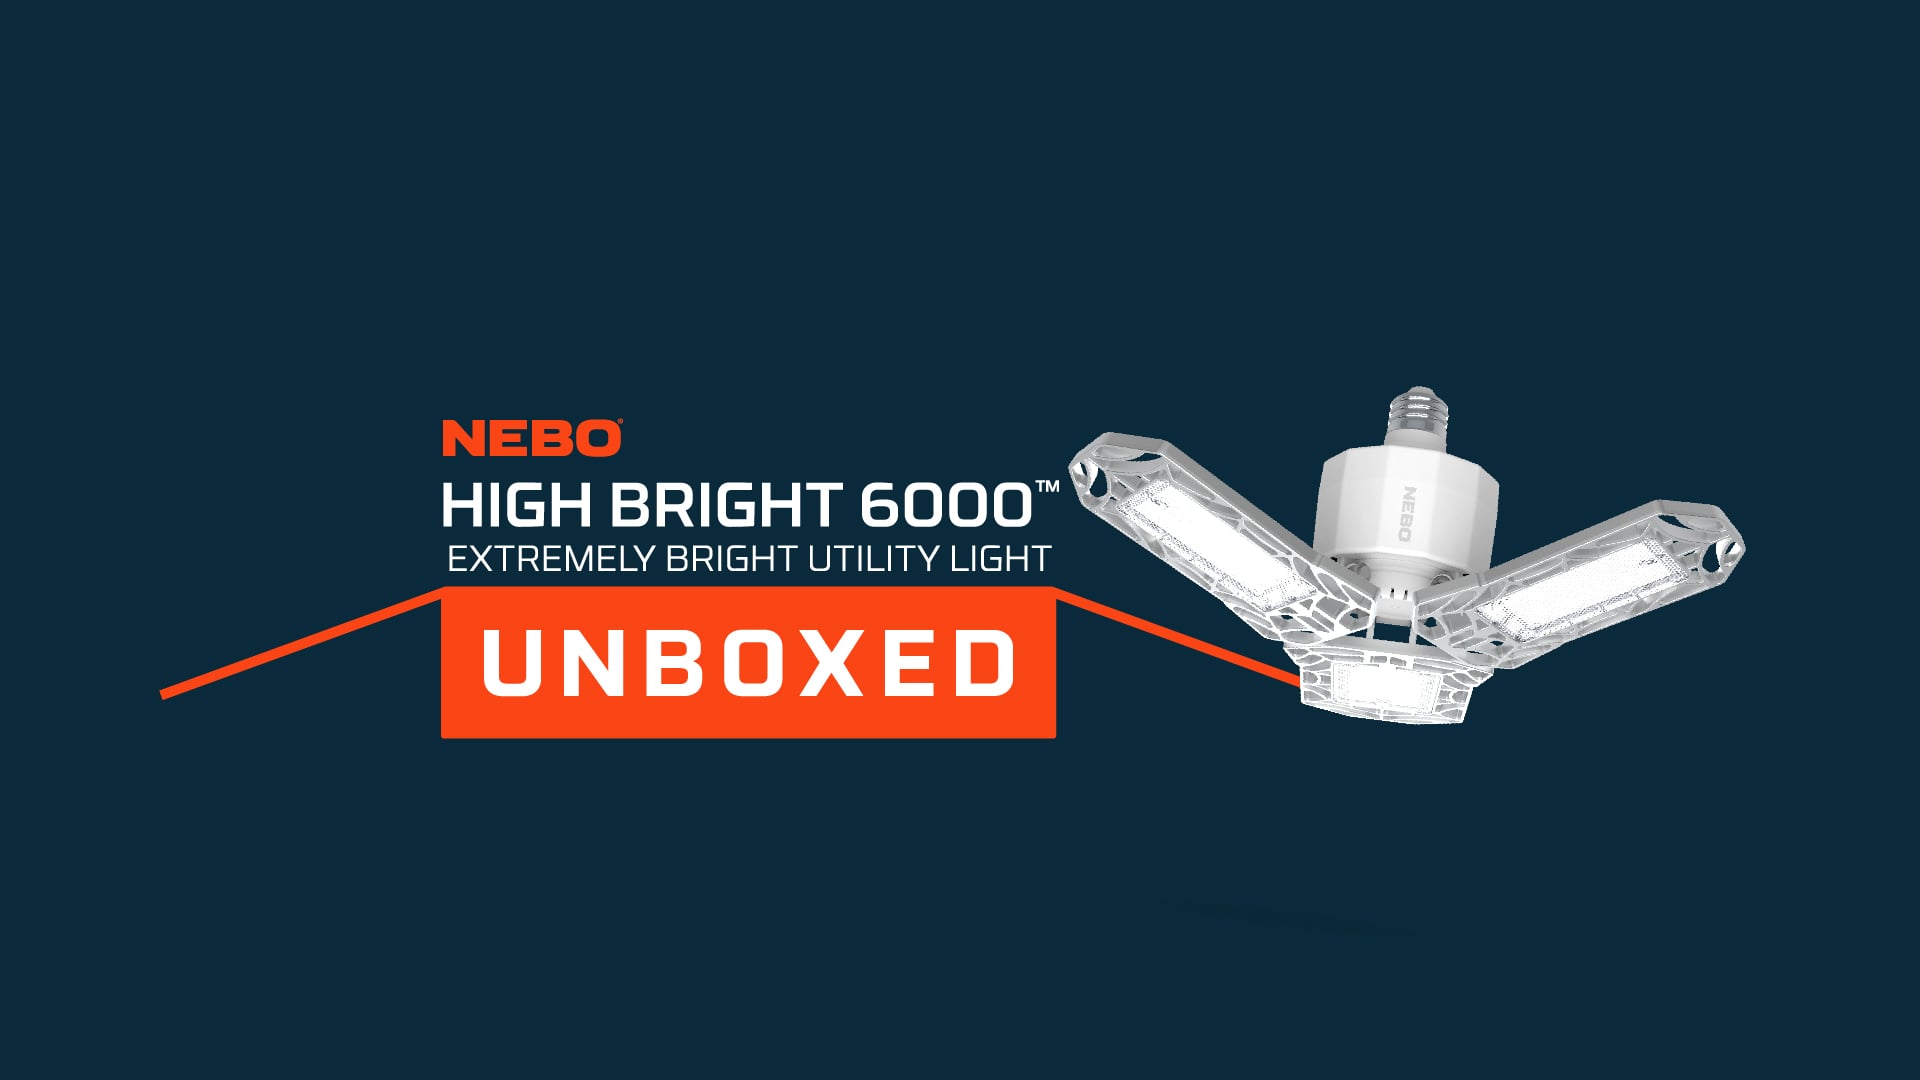 NEBO Unboxed: High Bright 6000 - Ultra-Bright 6,000 Lumen Light on Vimeo